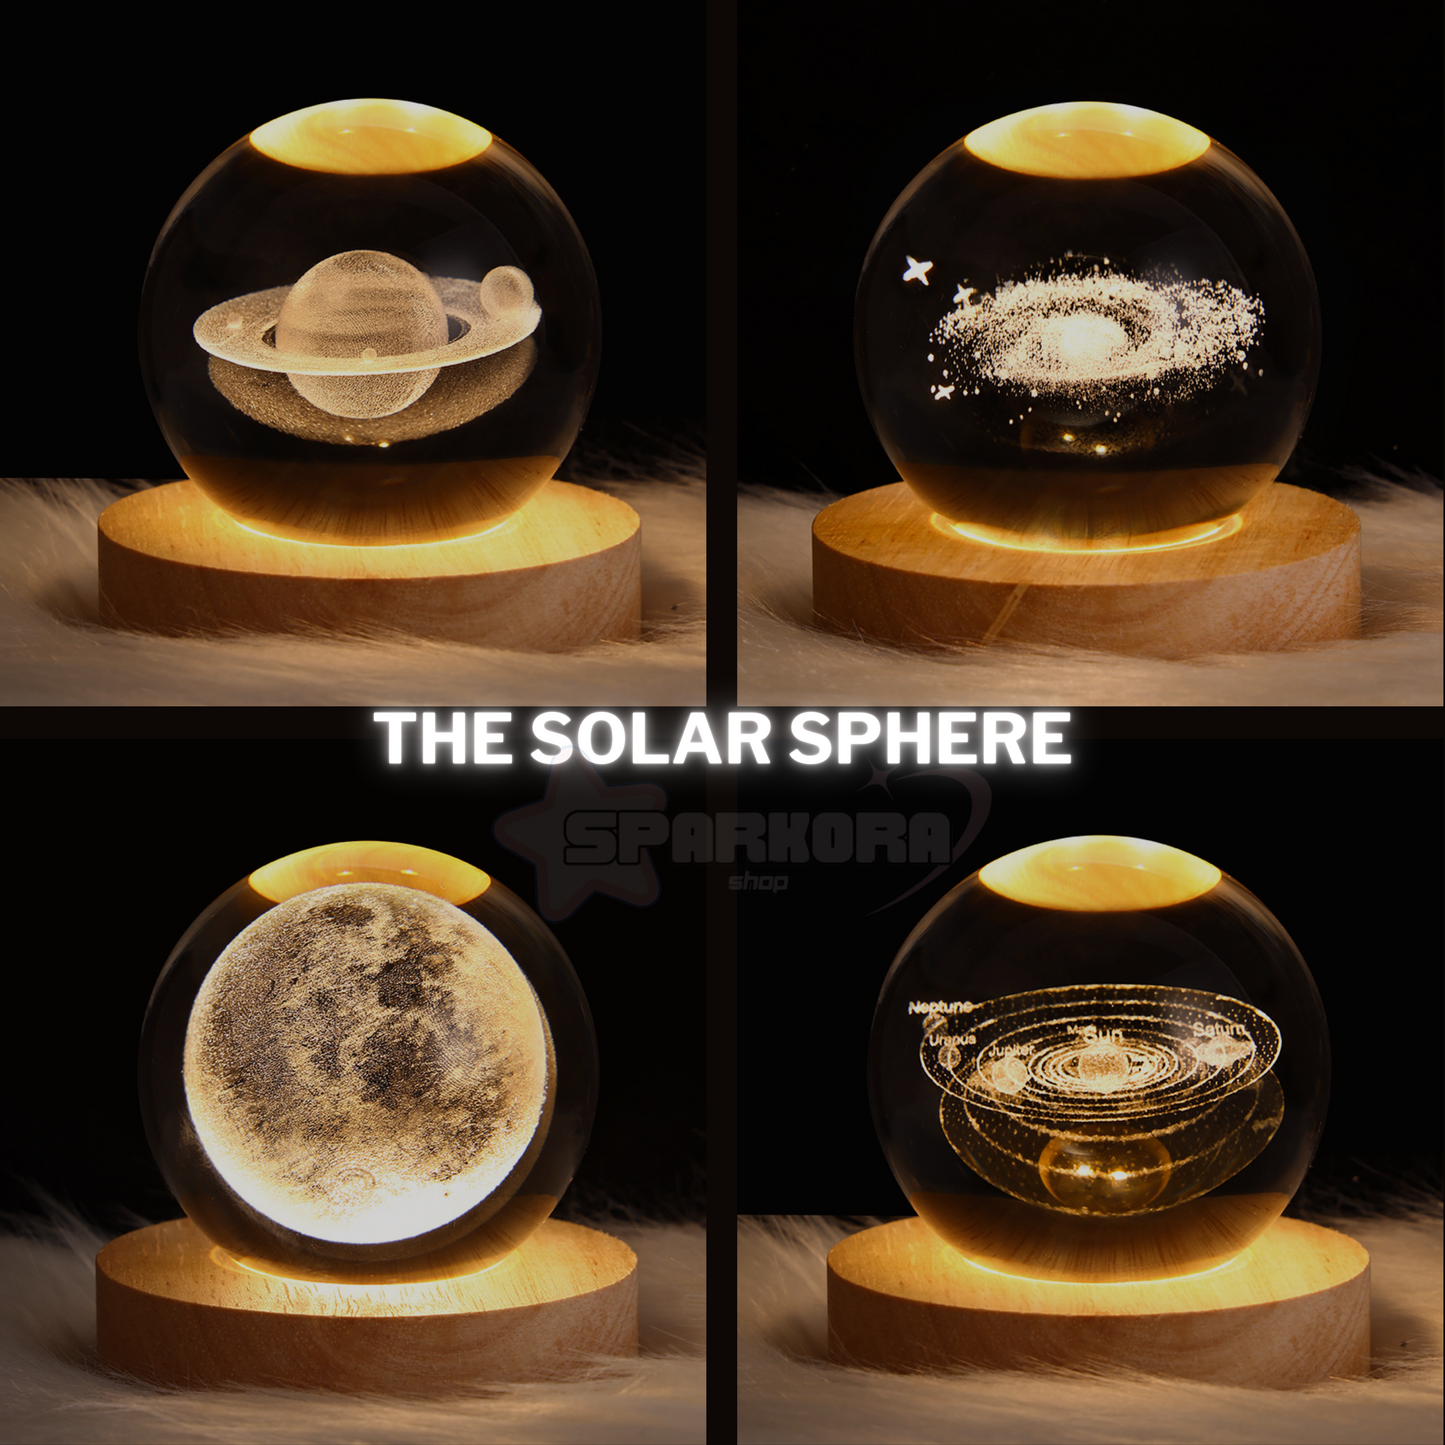 The Solar Sphere